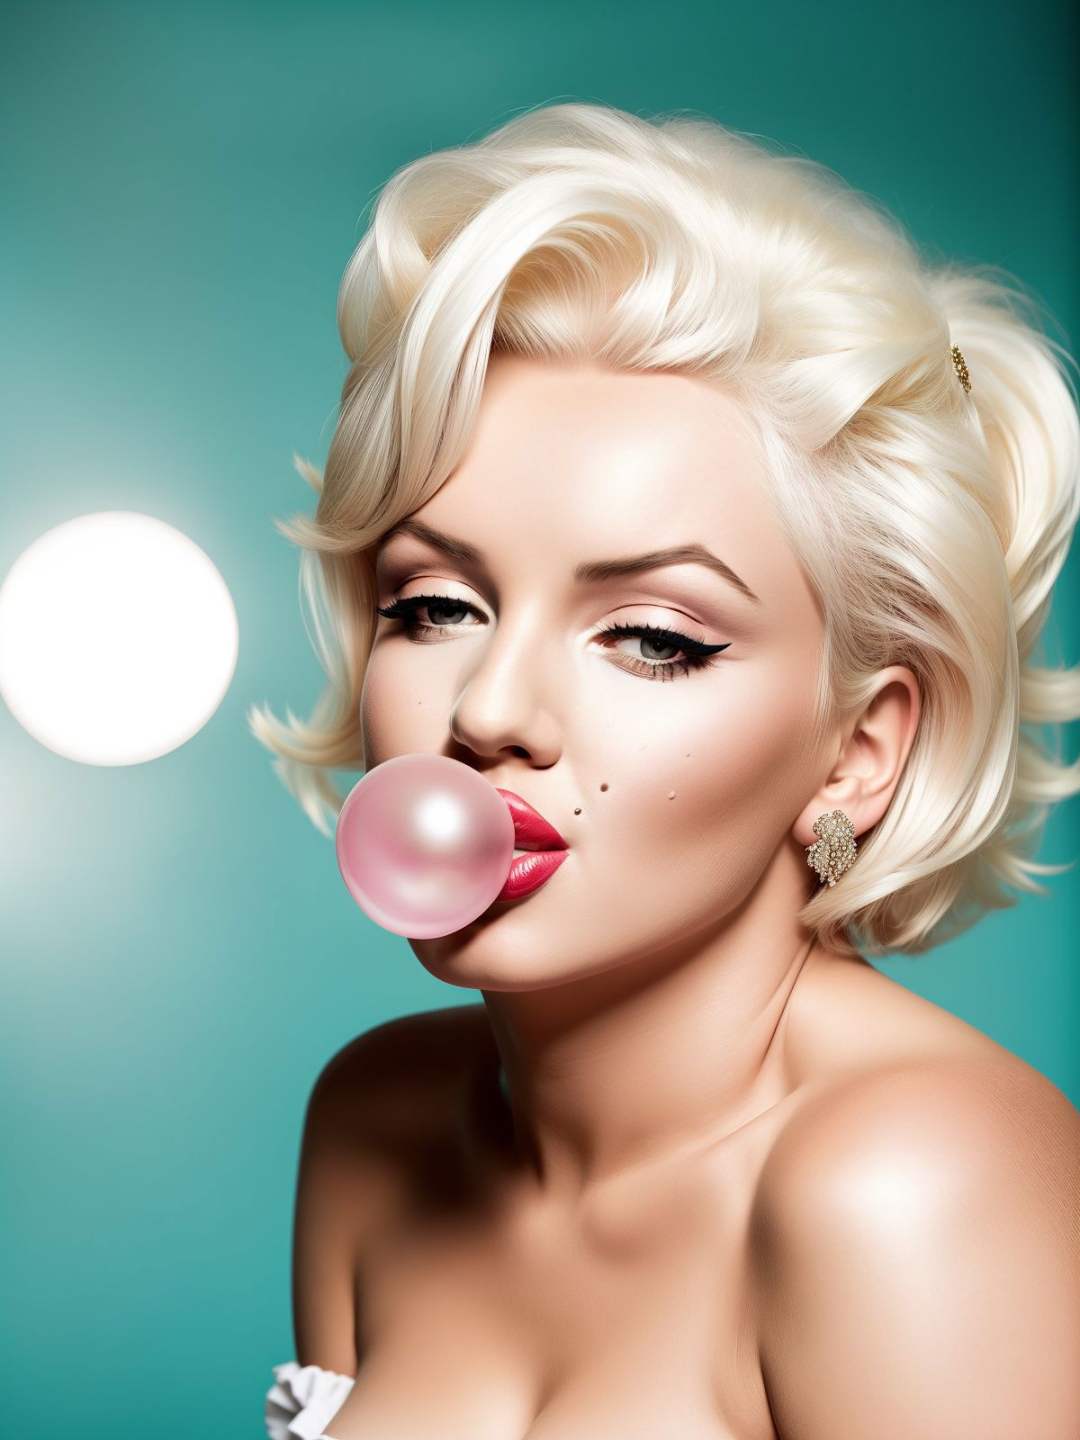 RAW Marilyn Monroe blow bubble gum, looks at the camera, blonde, open shoulders, mole, light background, bokeh, ornate background. <lora:Bubble Gum_v2.0:0.6>